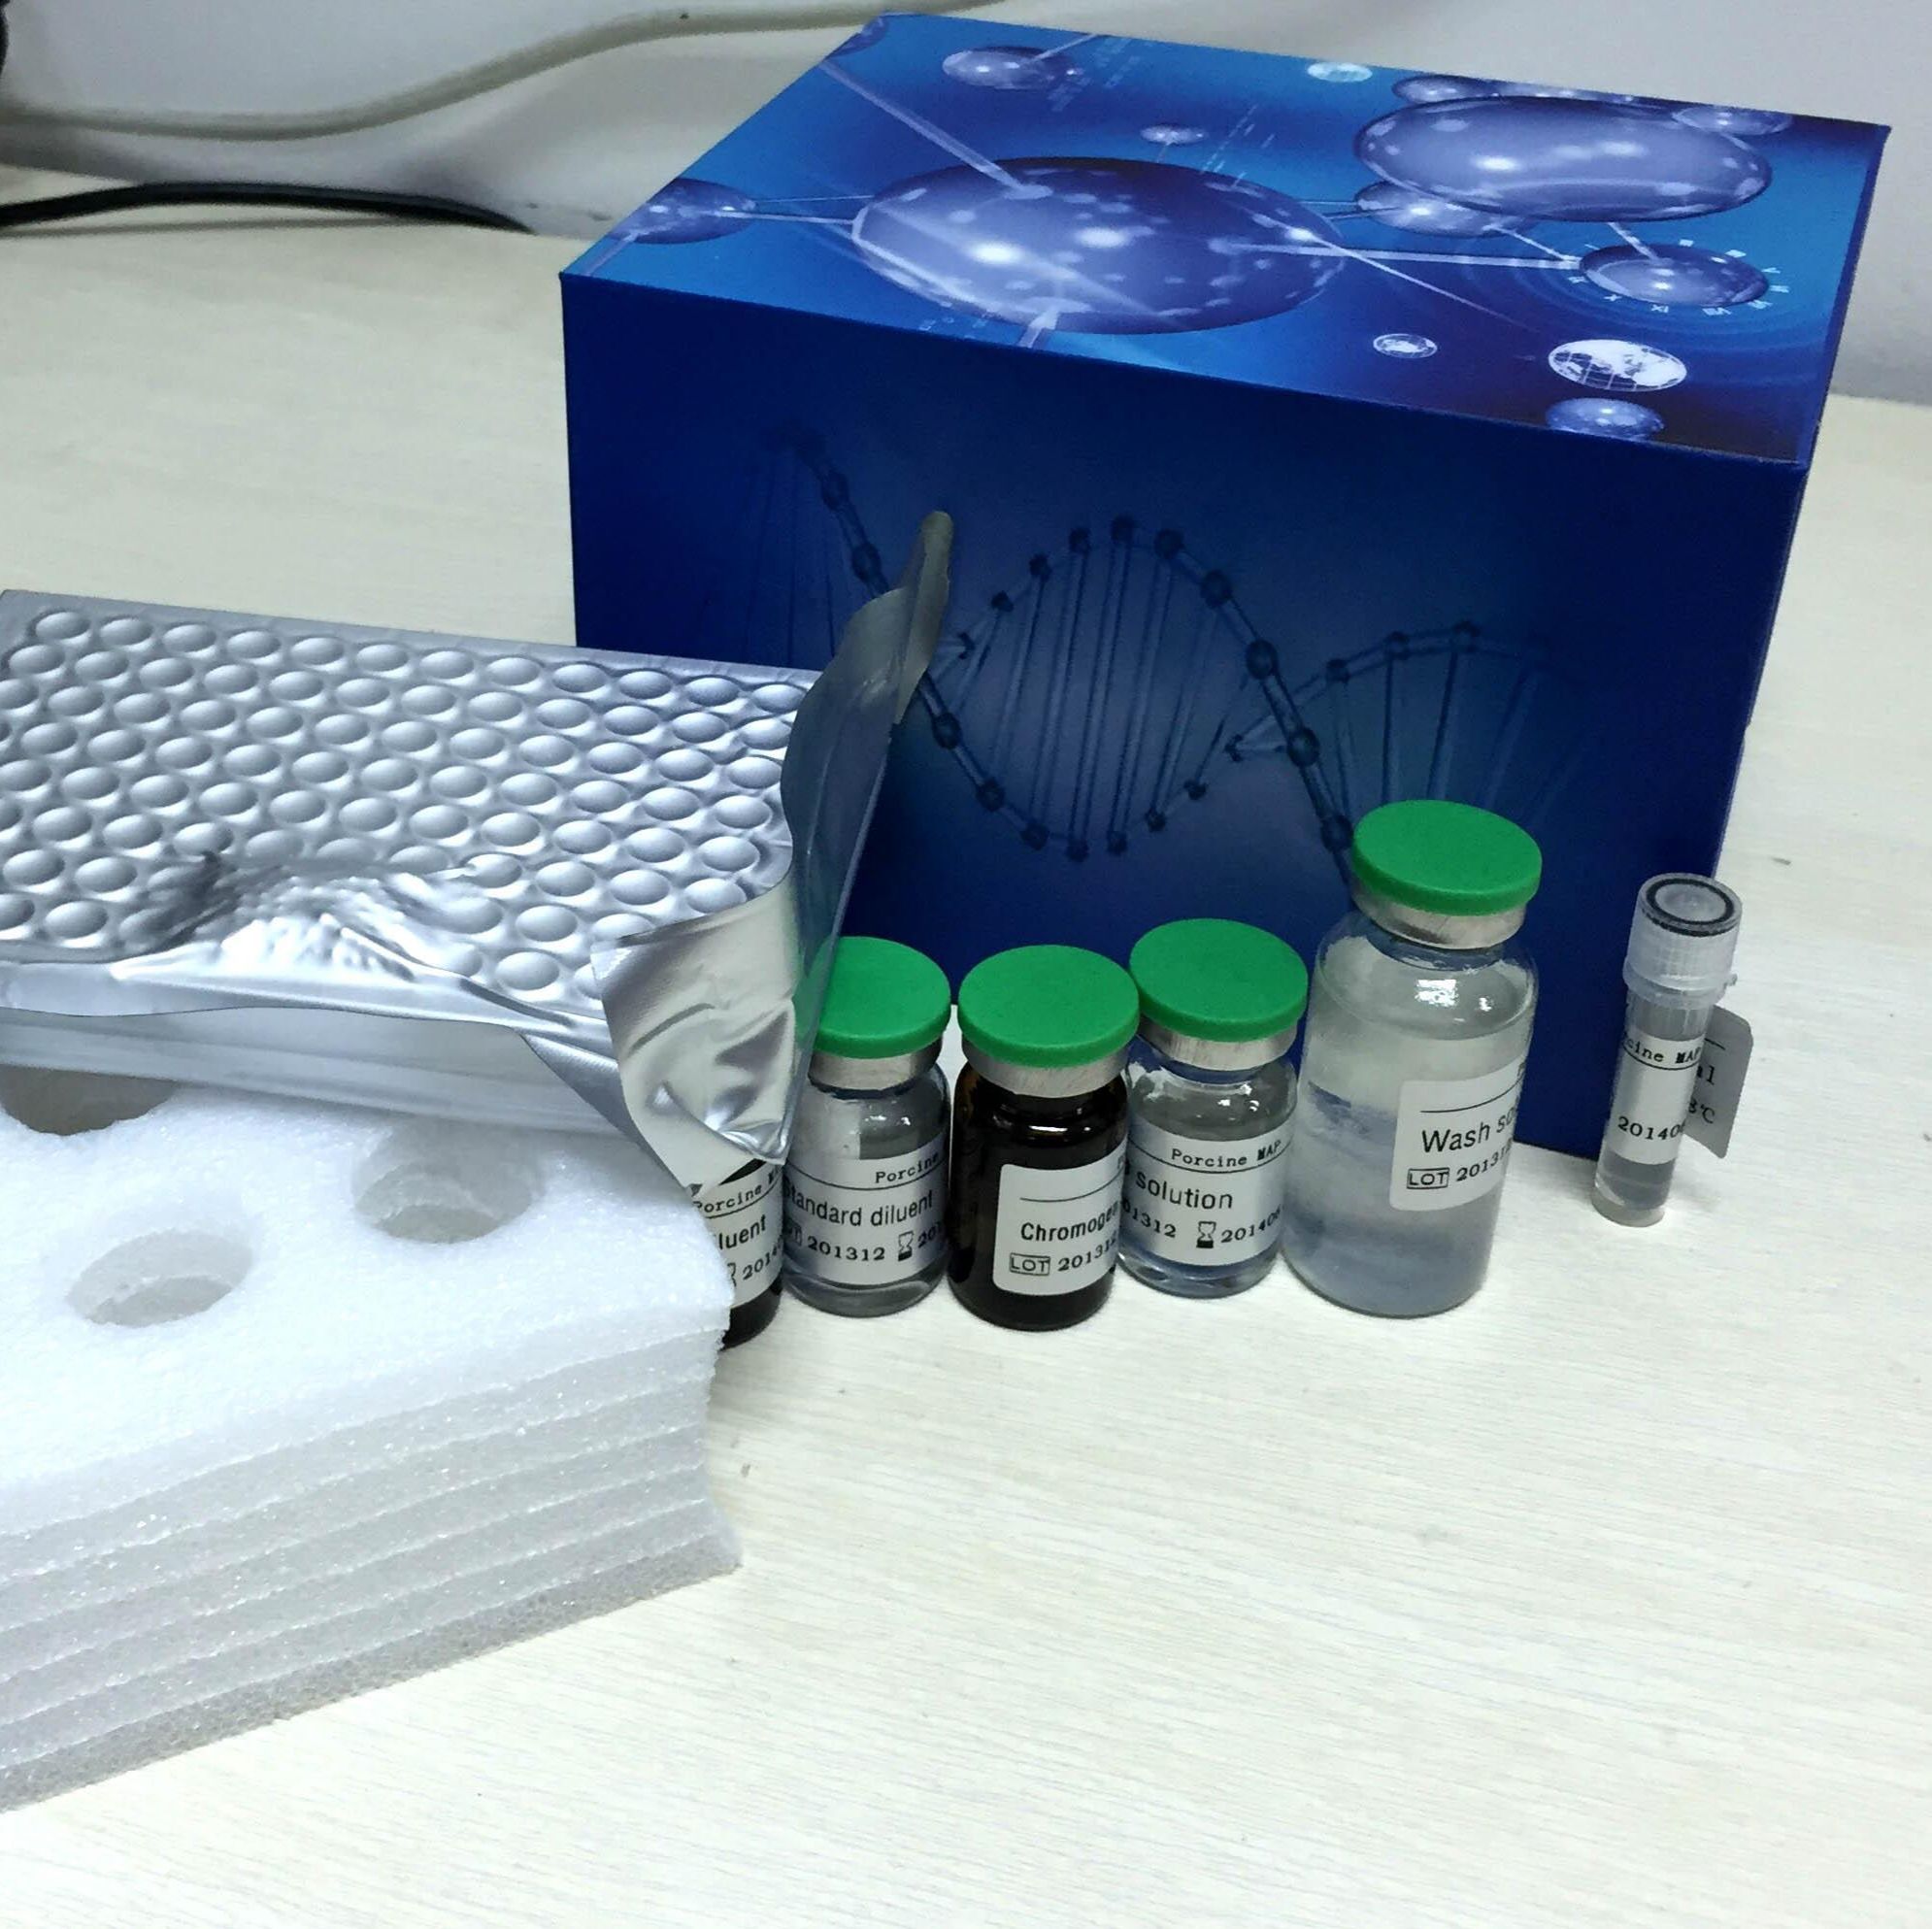 Annexin V-APC/ PI荧光双染细胞凋亡检测试剂盒